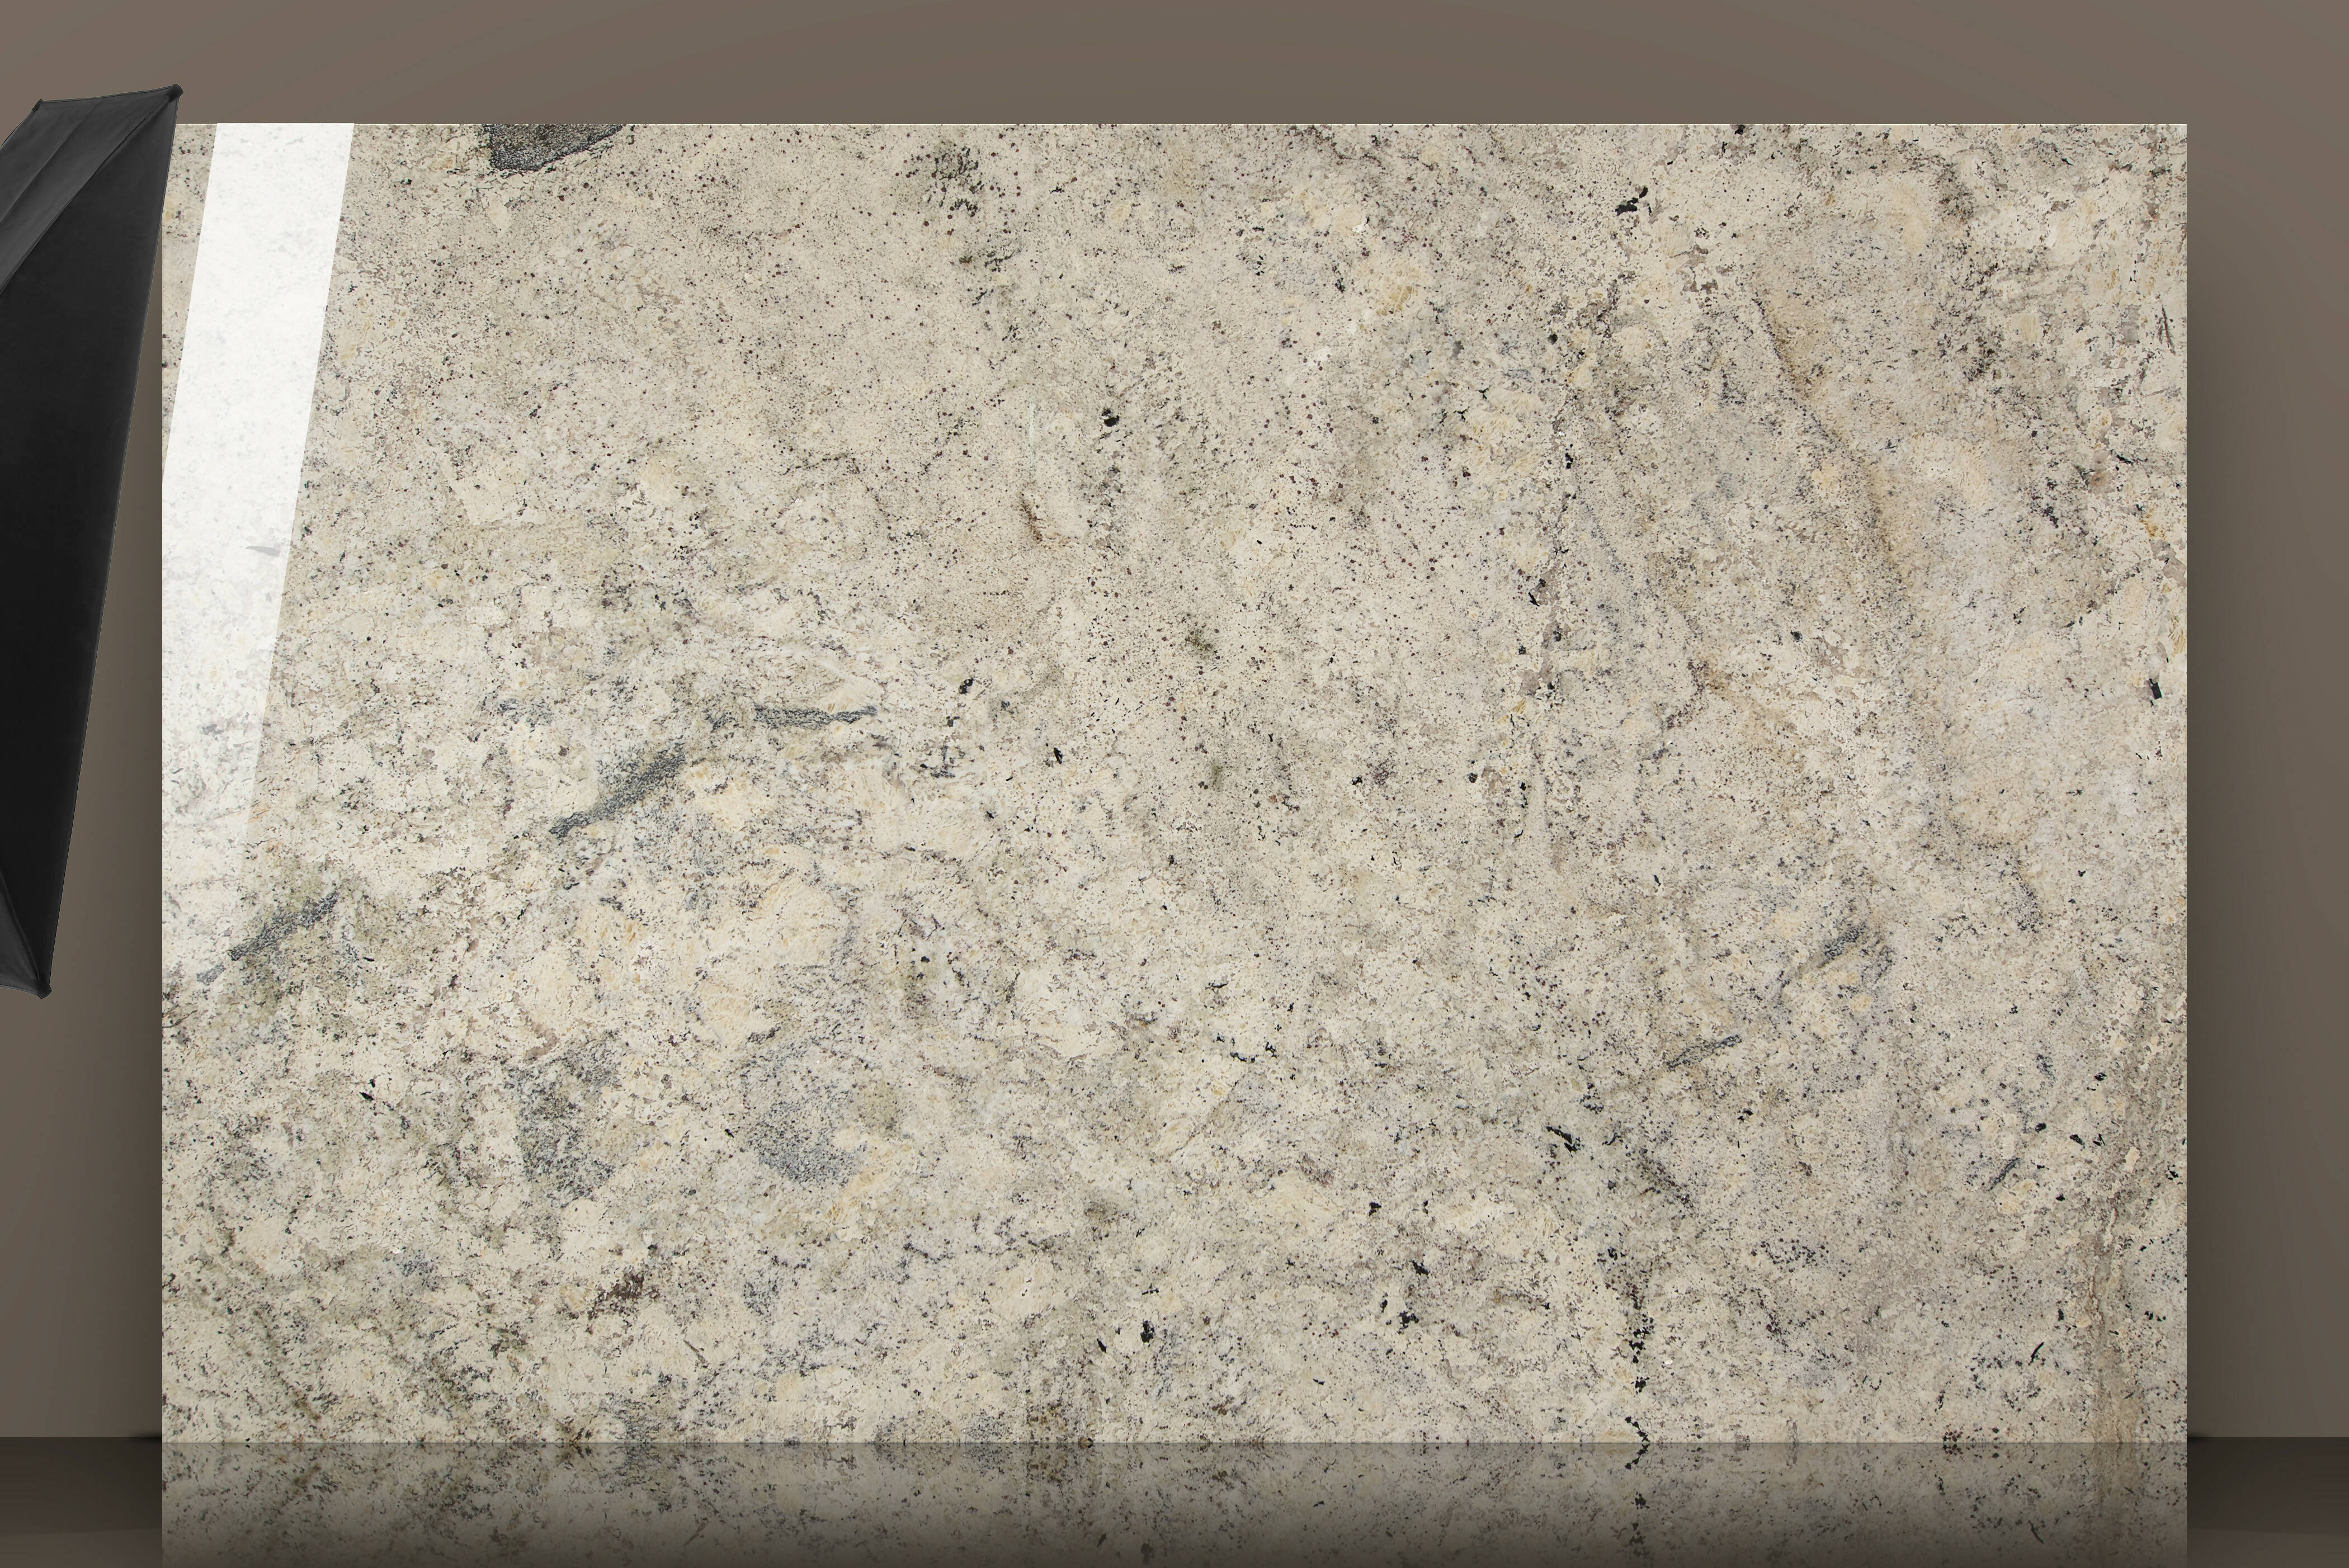 PERSA AVORIO GRANITE,Granite,Sonic Stone,www.work-tops.com